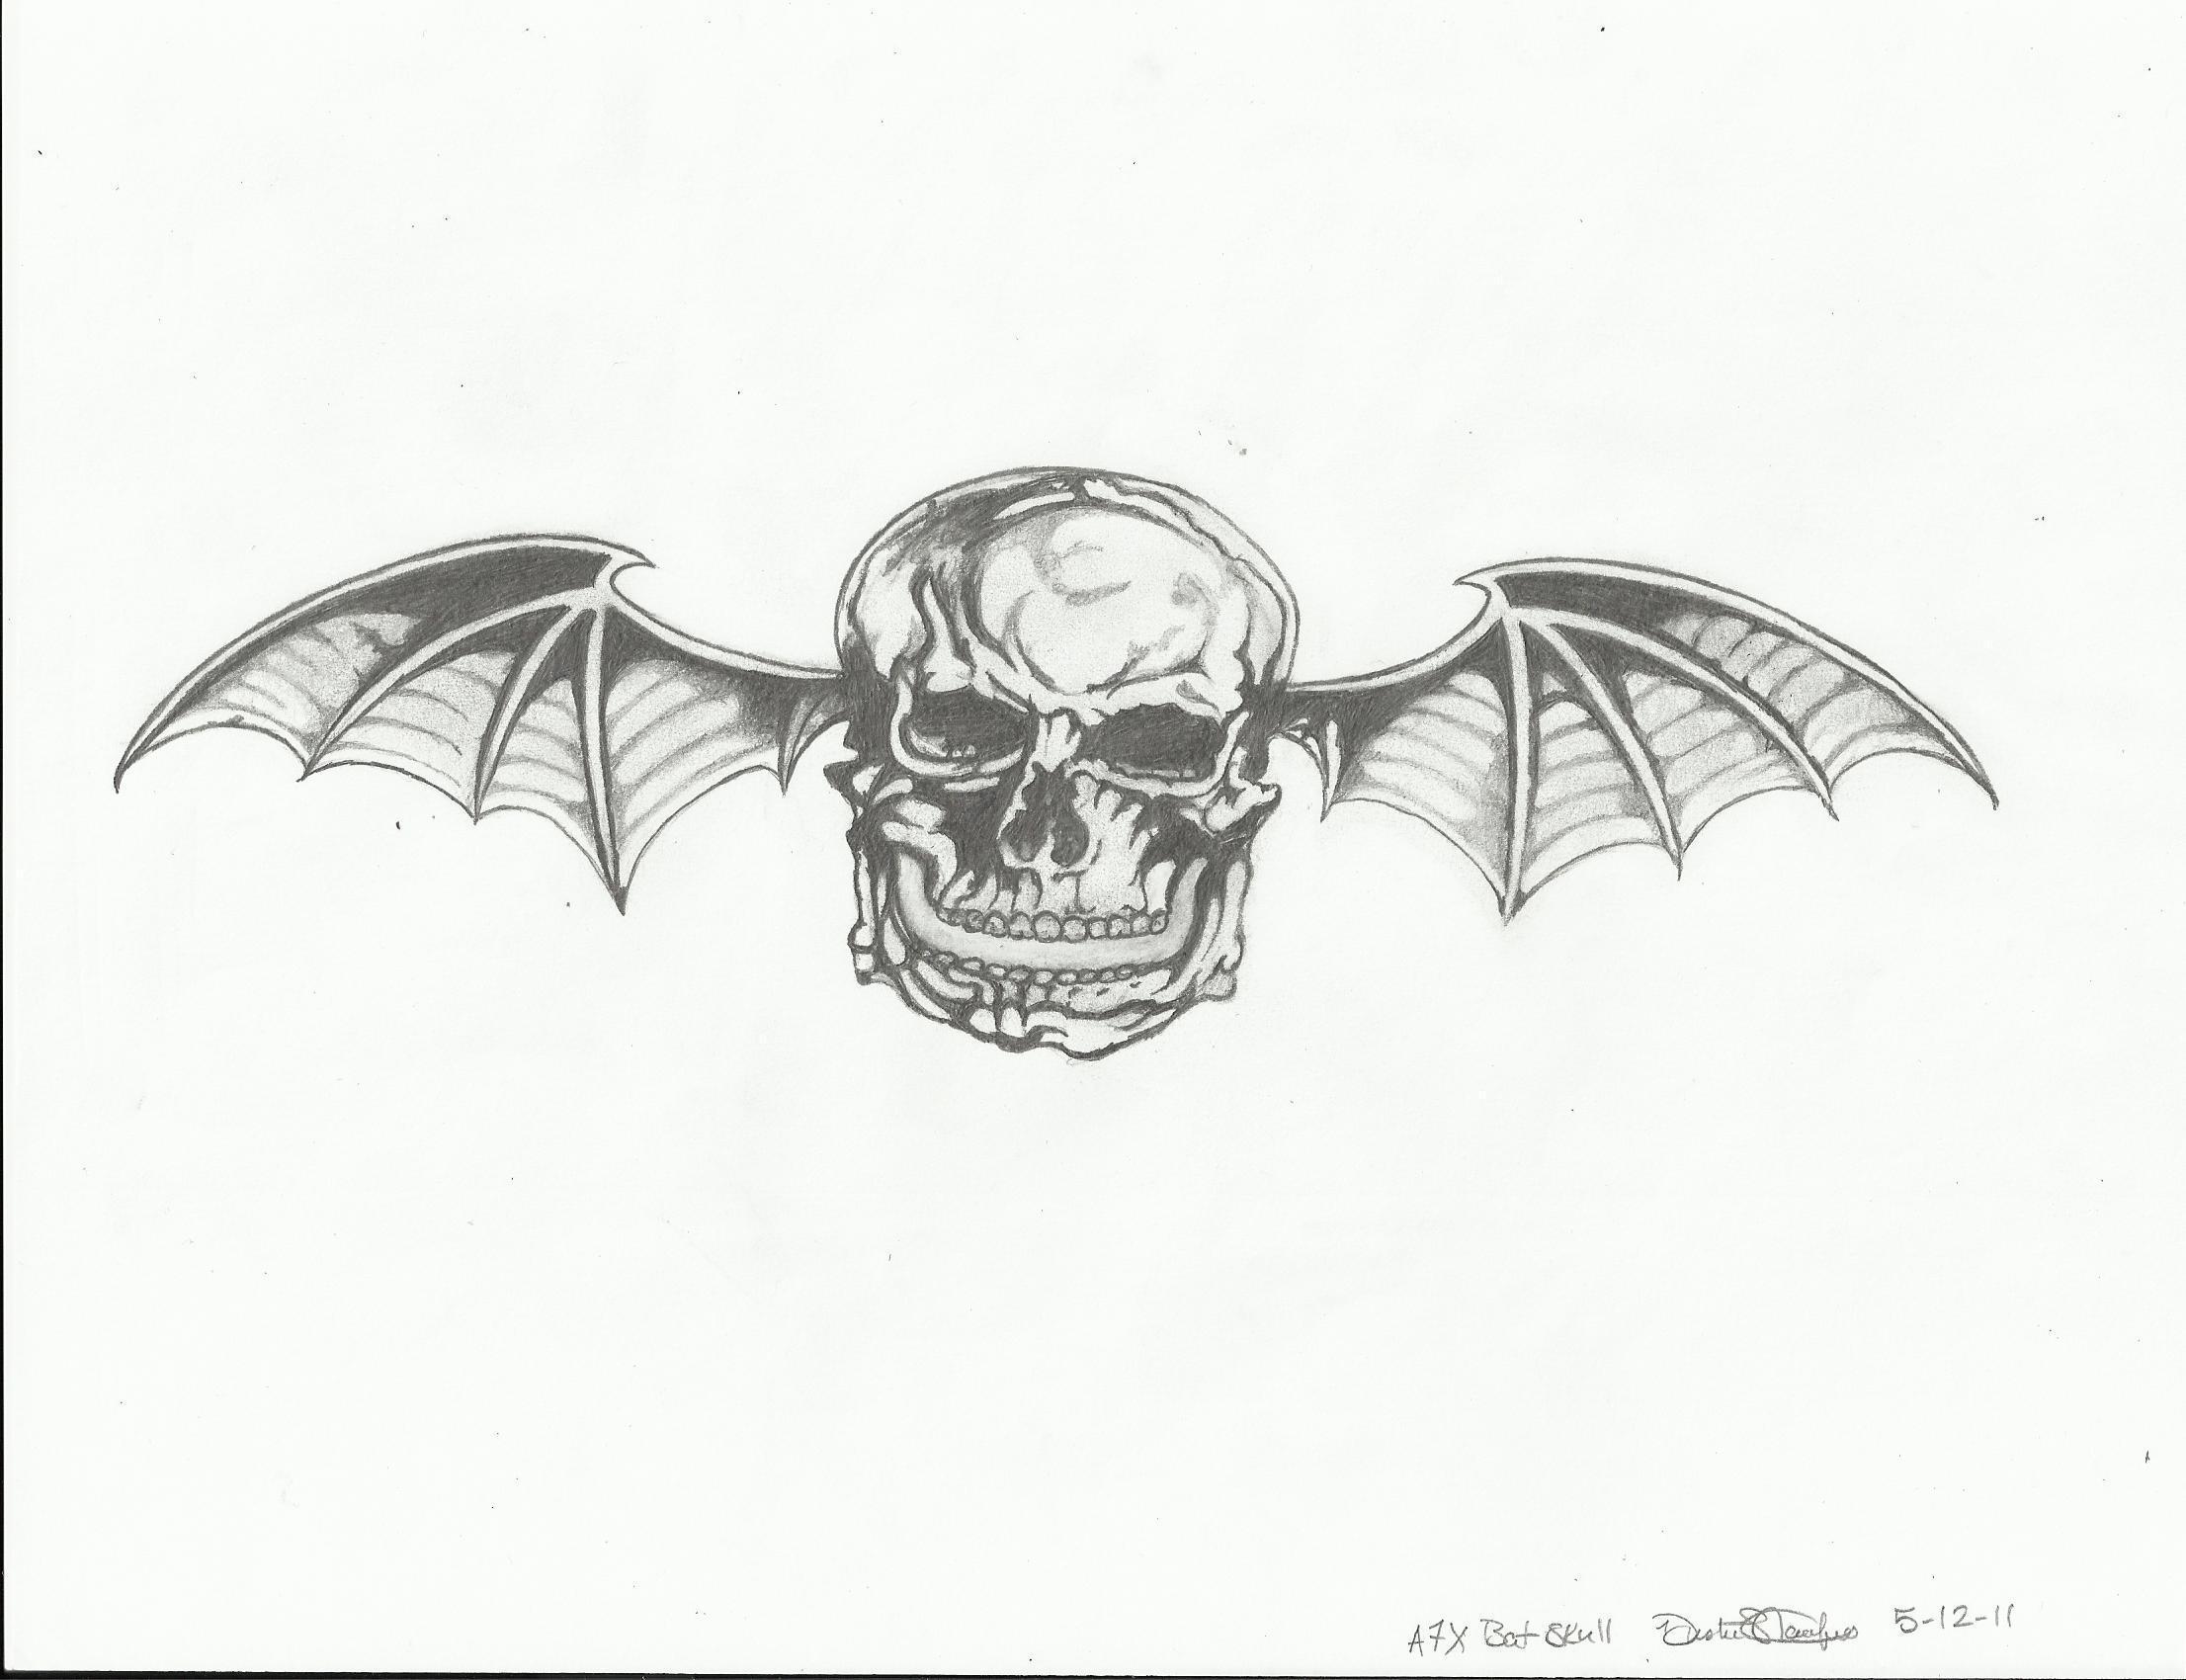 Rev Death Bat Logo - Avenged Sevenfold image A7X Deathbat HD wallpaper and background